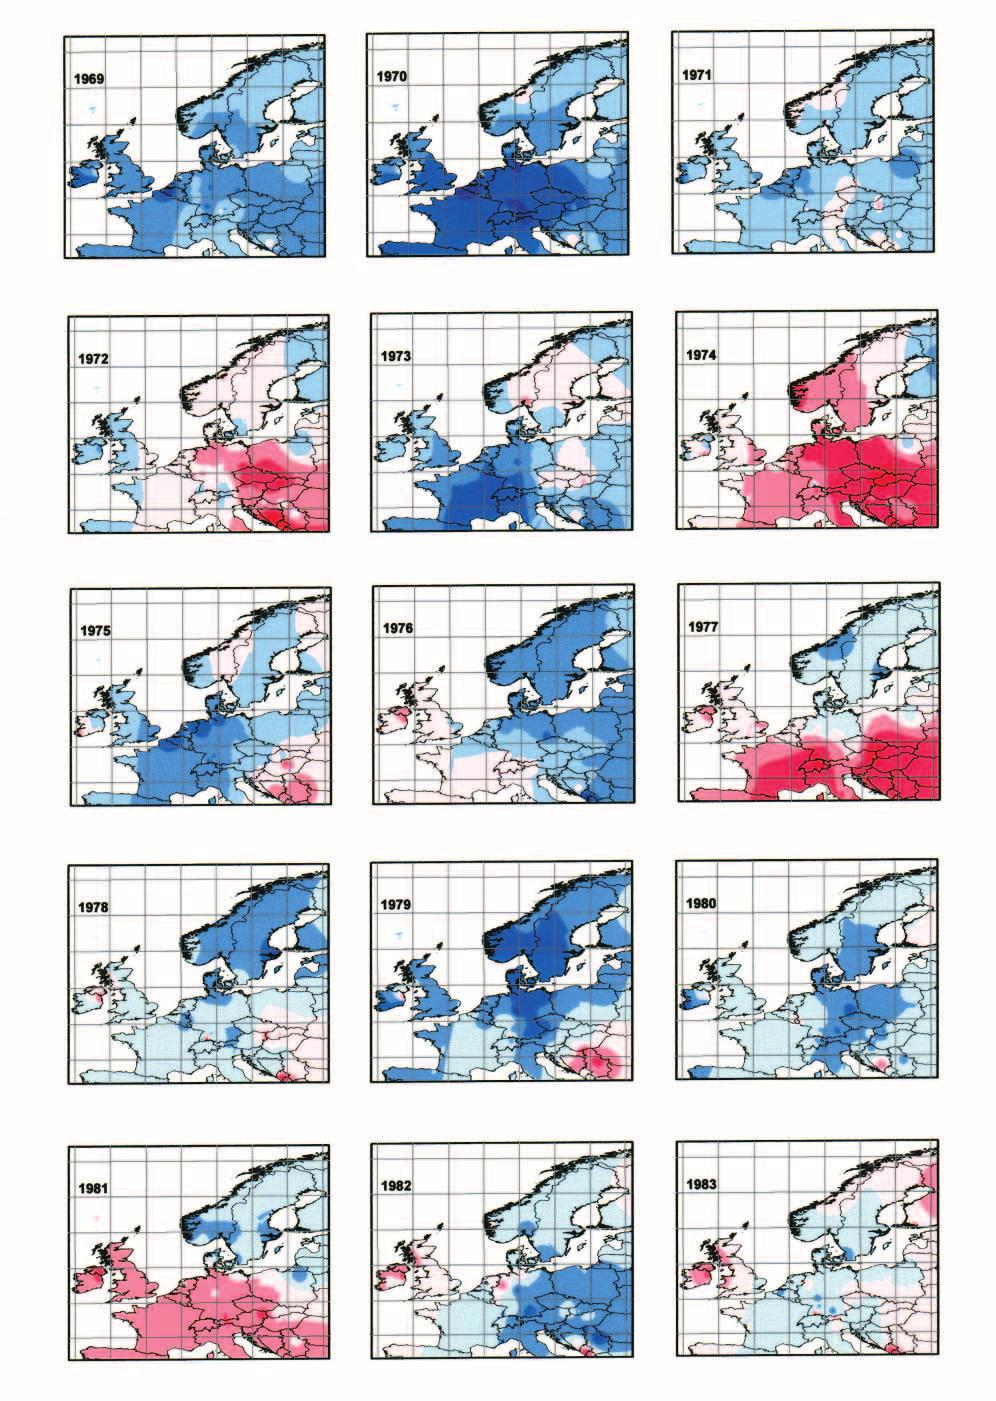 Chmielewski & Rötzer: Variability of the beginning of growing season in Europe 261 Fig.